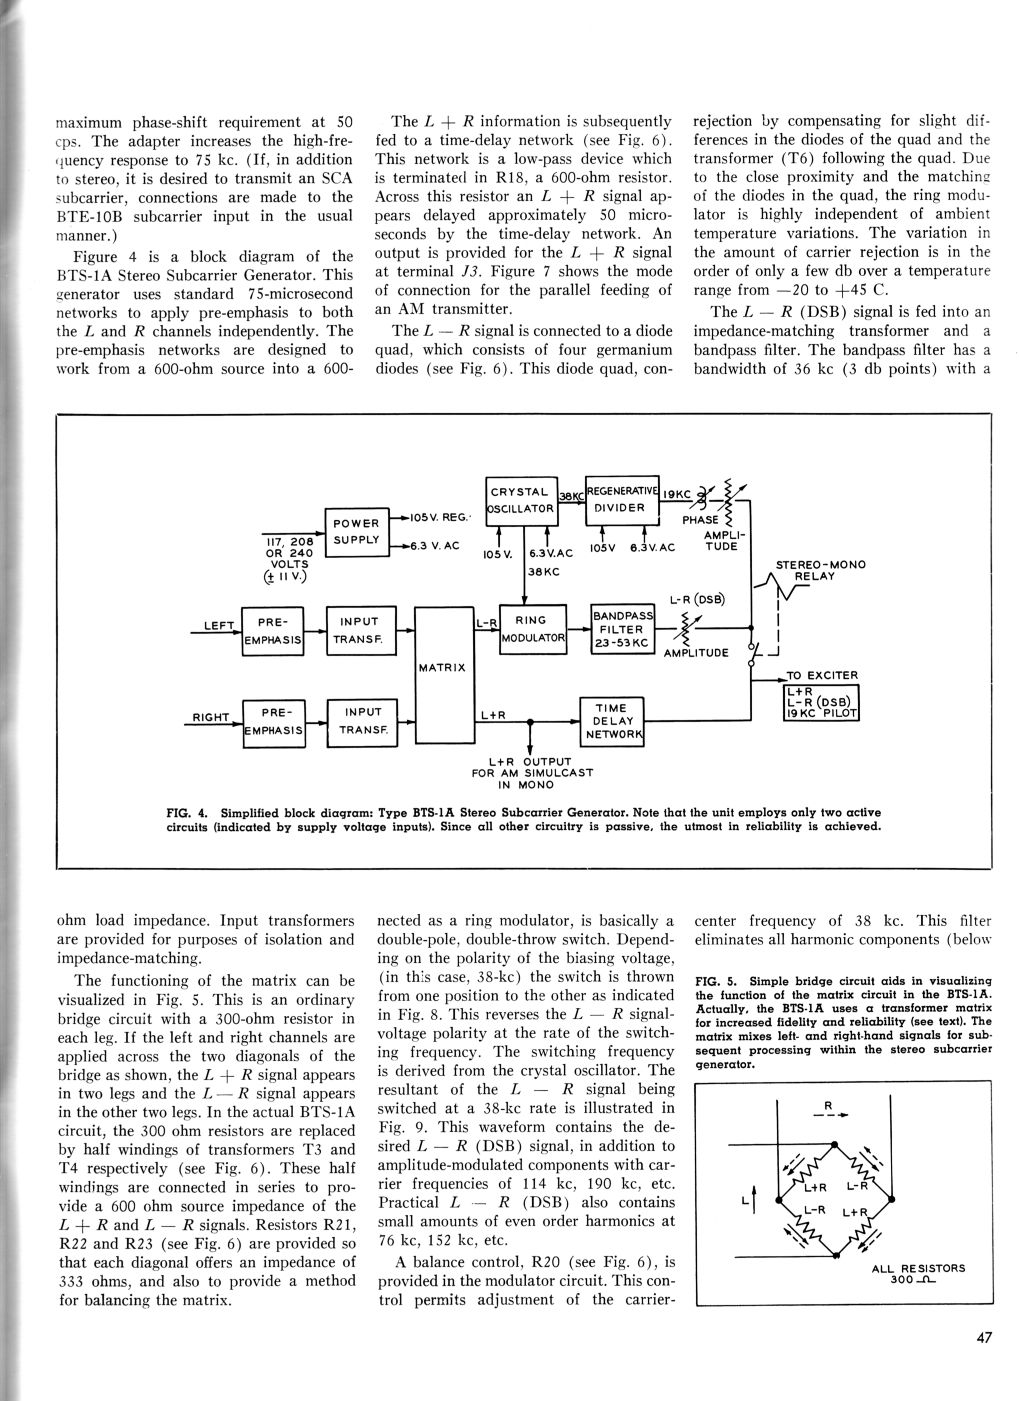 RCA TT-25AL Television Amplifier, page 3